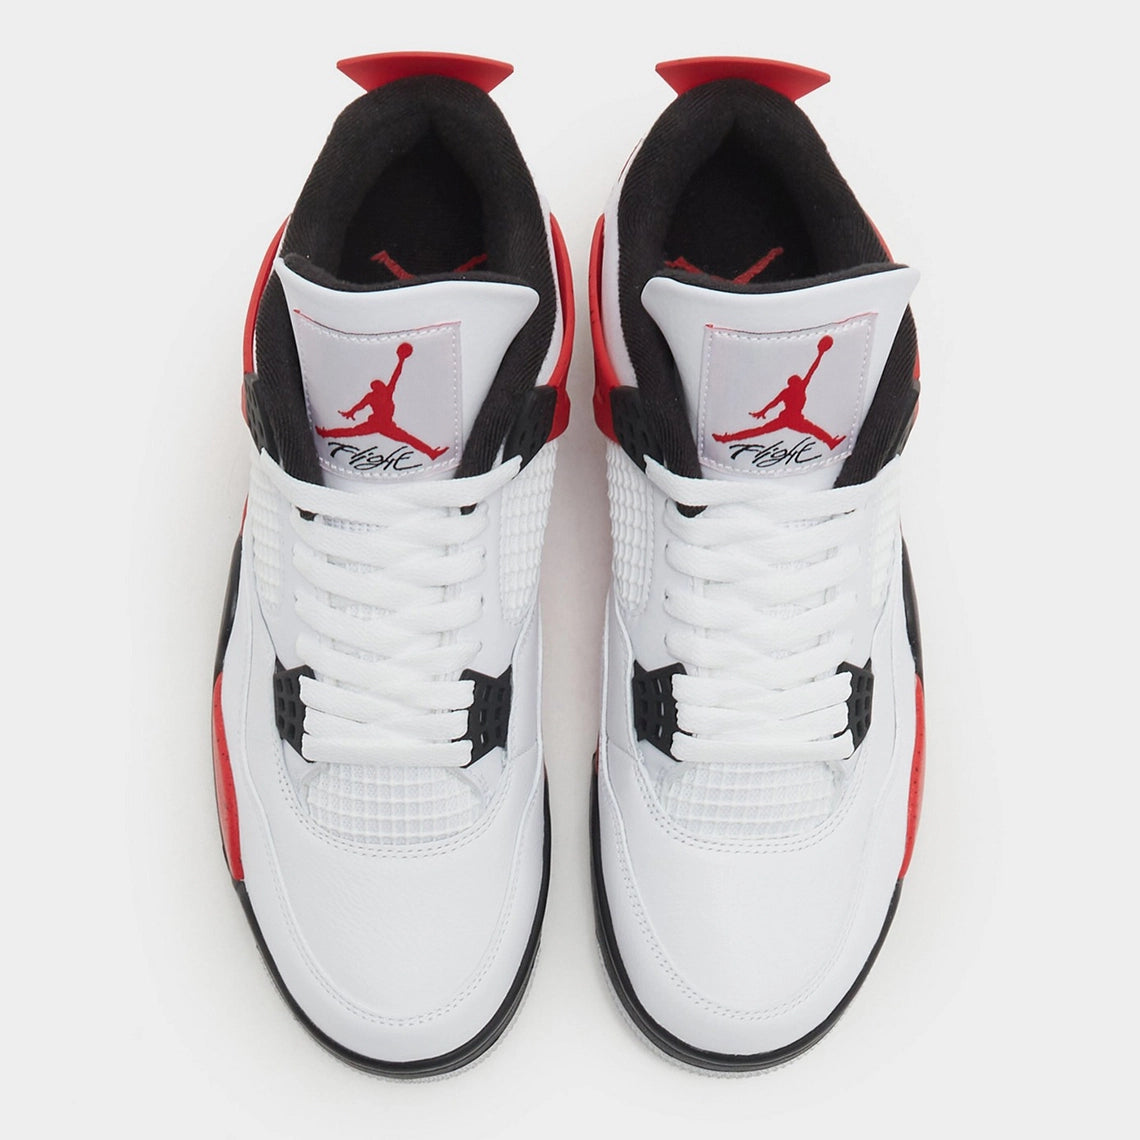 Air Jordan 4 Retro 'Red Cement' 7Y